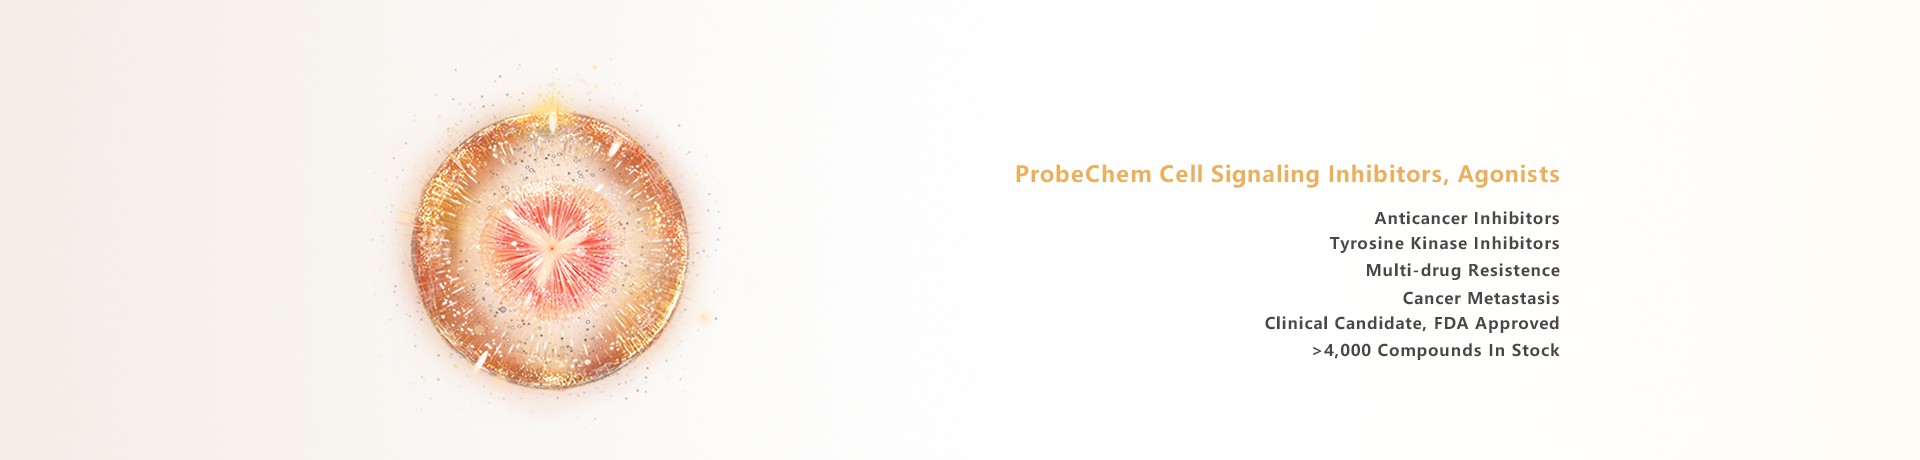 Probechem banner3 Cell Signal Inhibitors